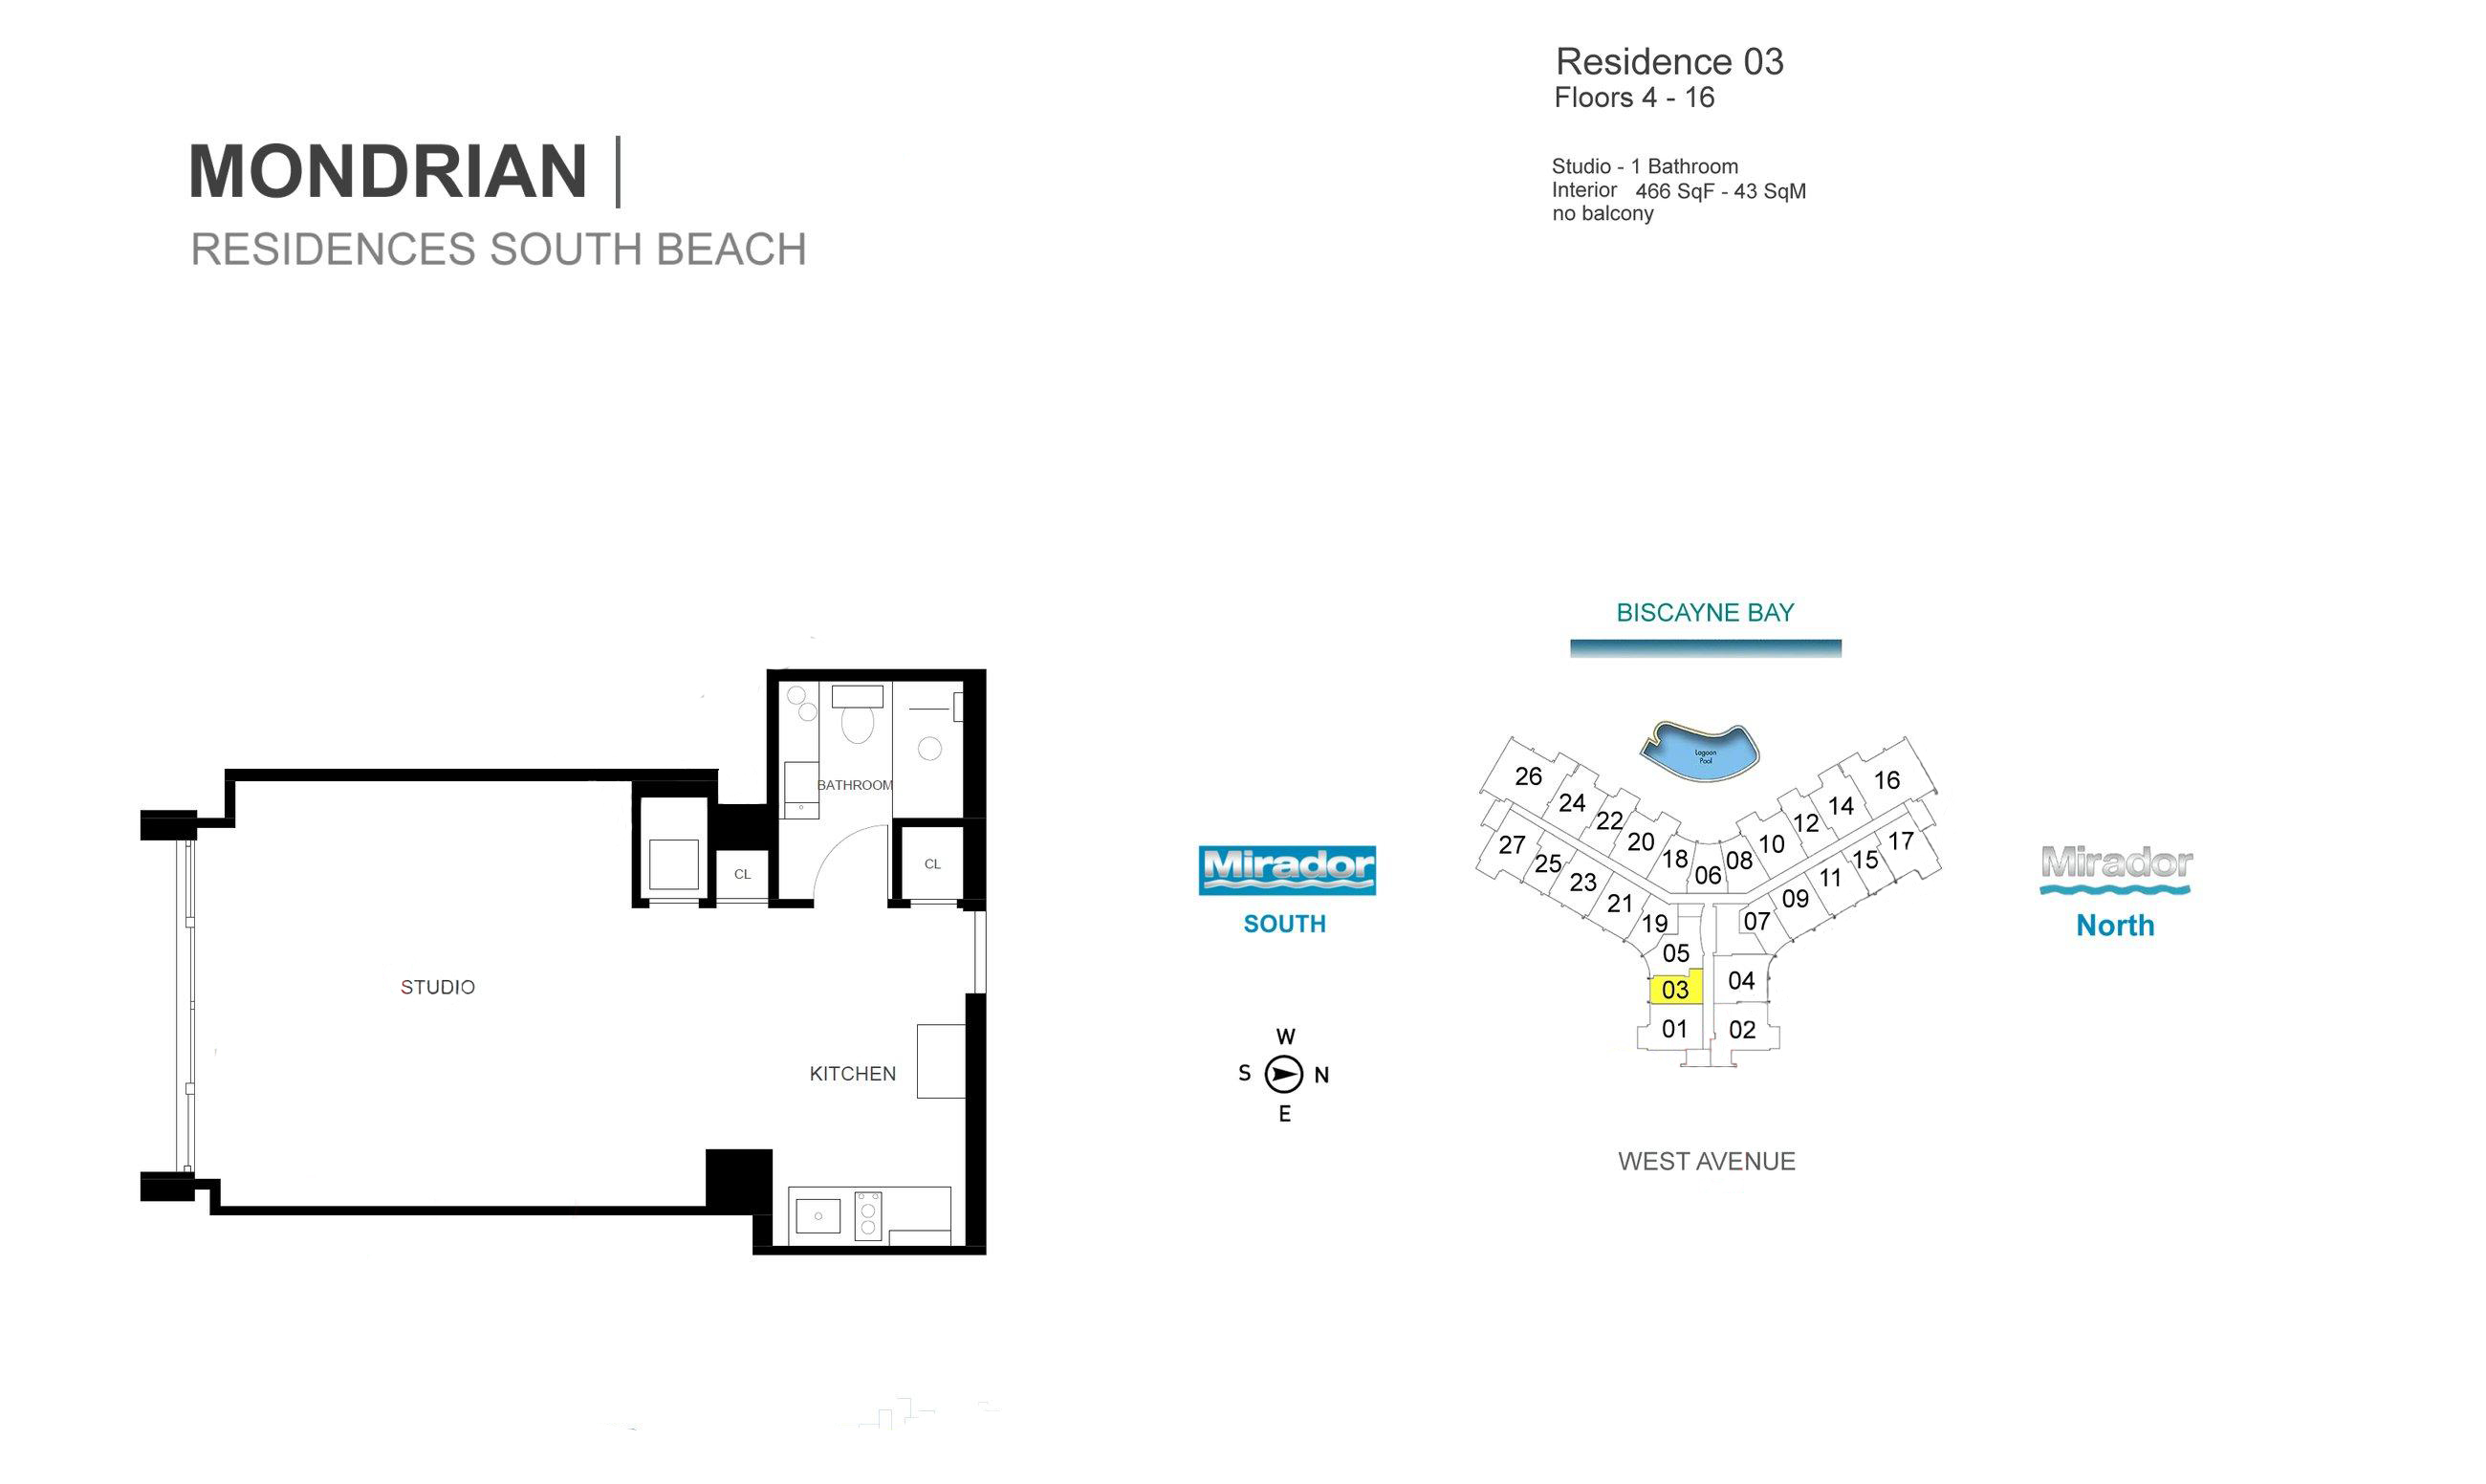 Mondrian South Beach Residence 03